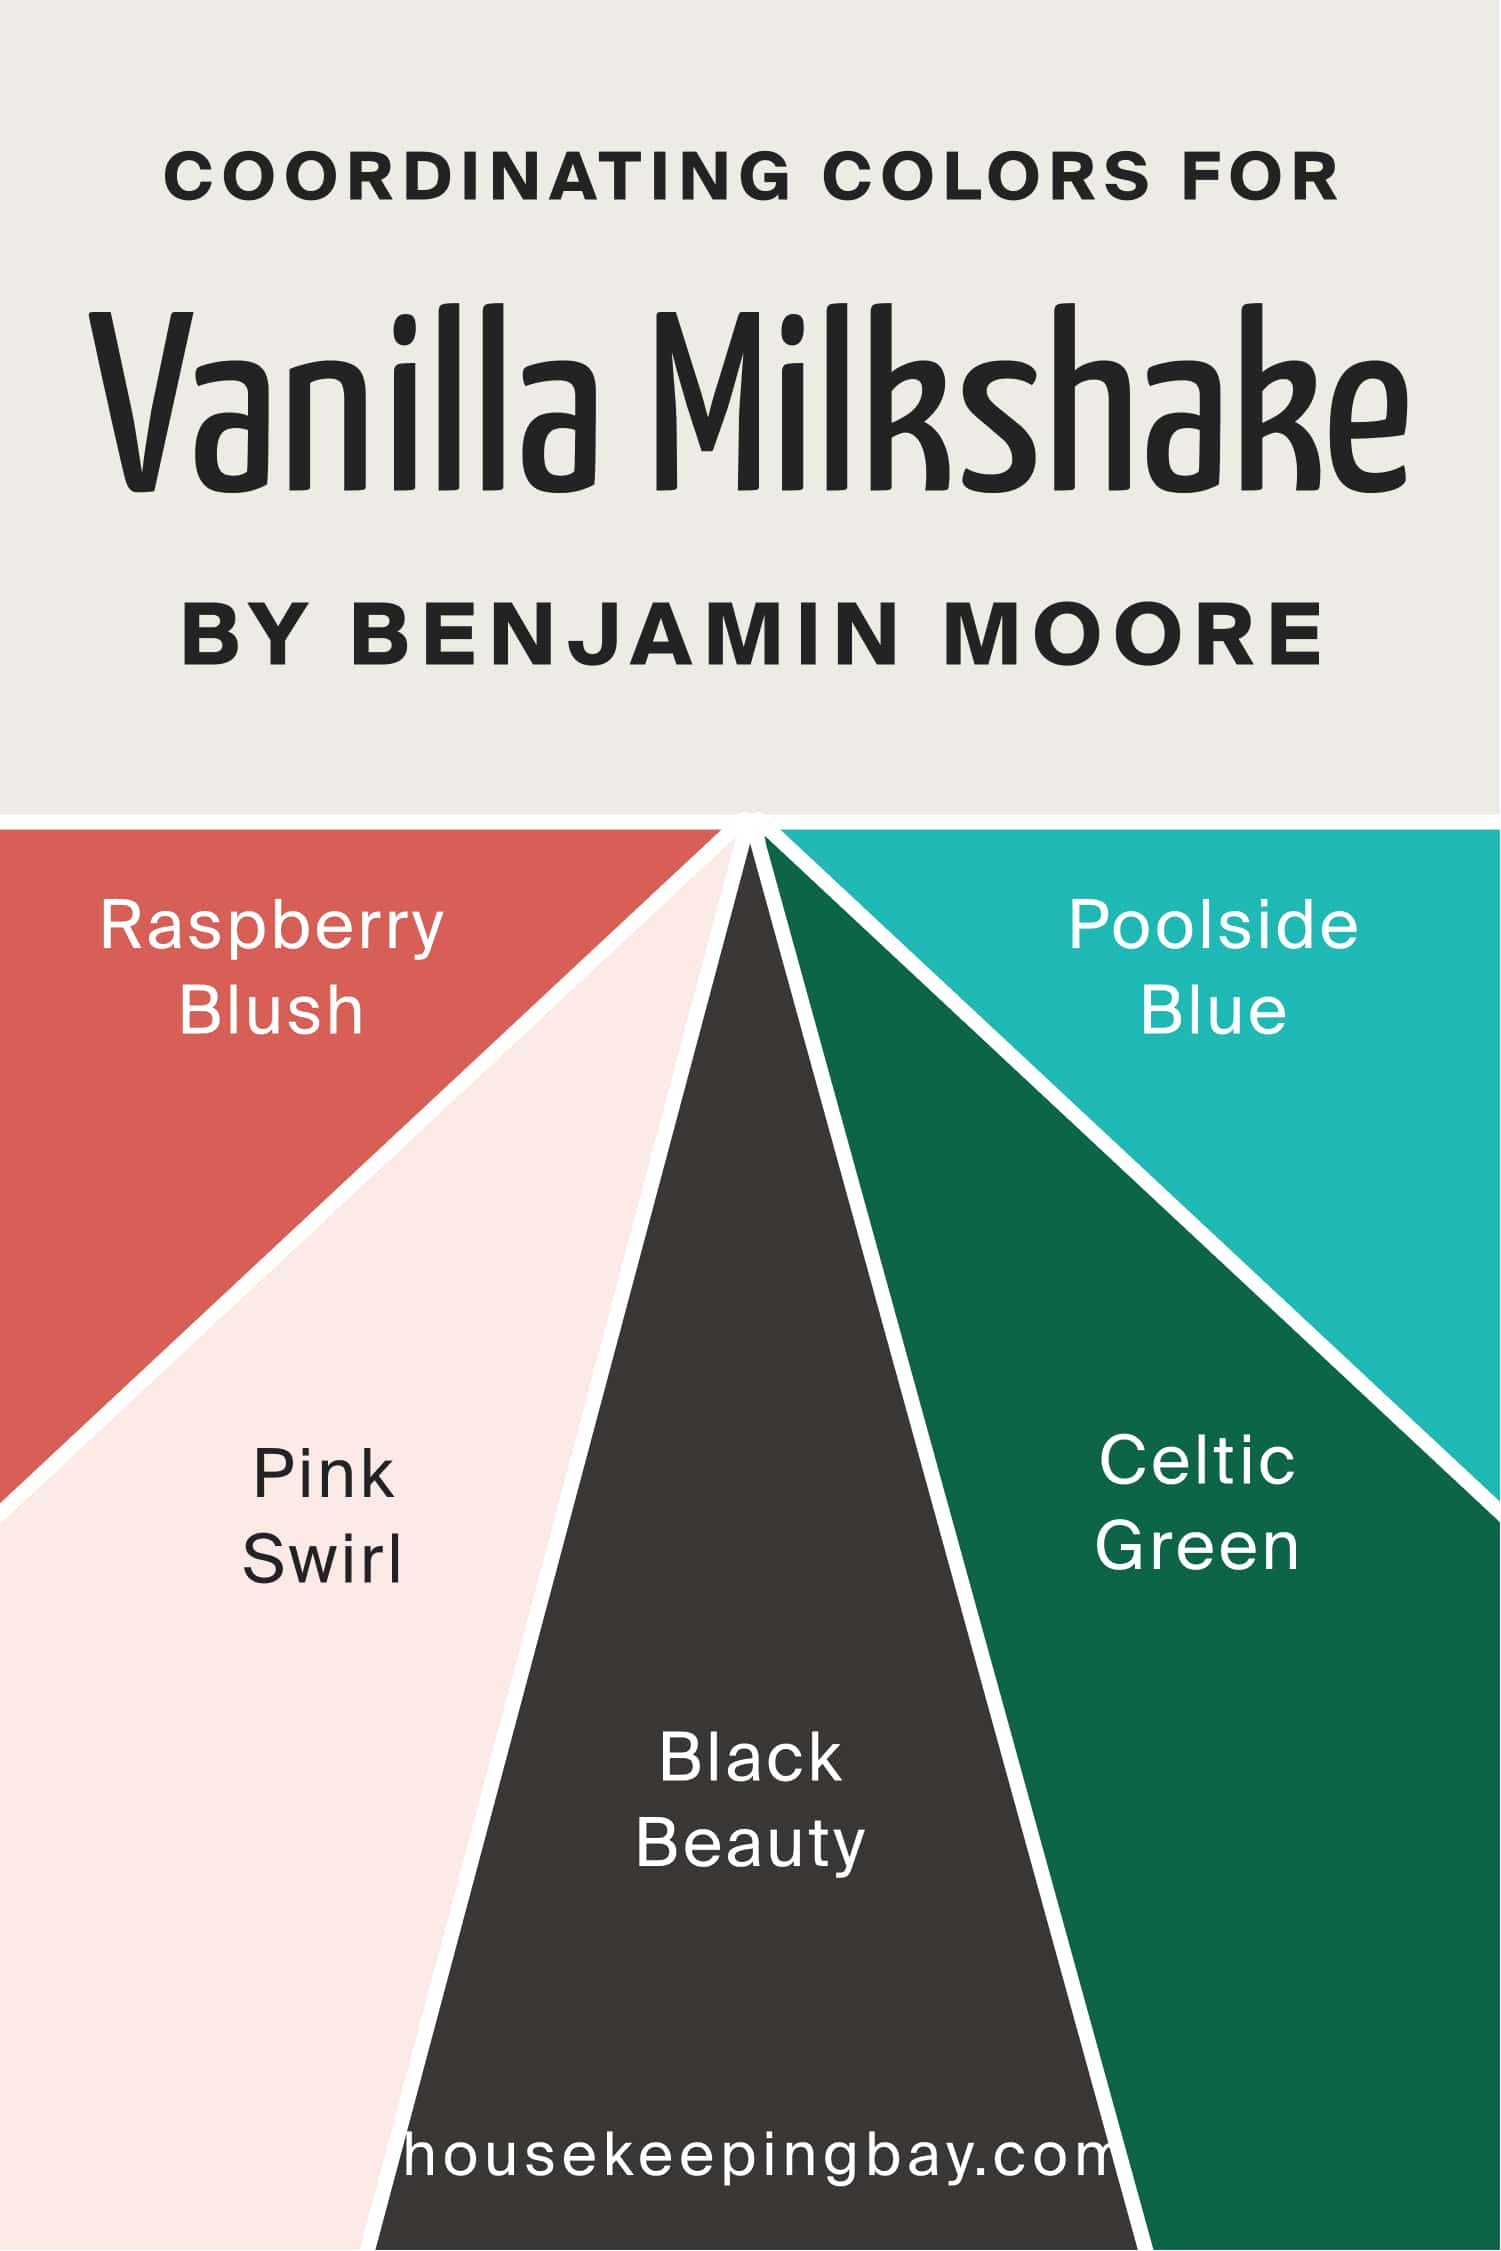 Coordinating Colors for Vanilla Milkshake 2141 70 by Benjamin Moore